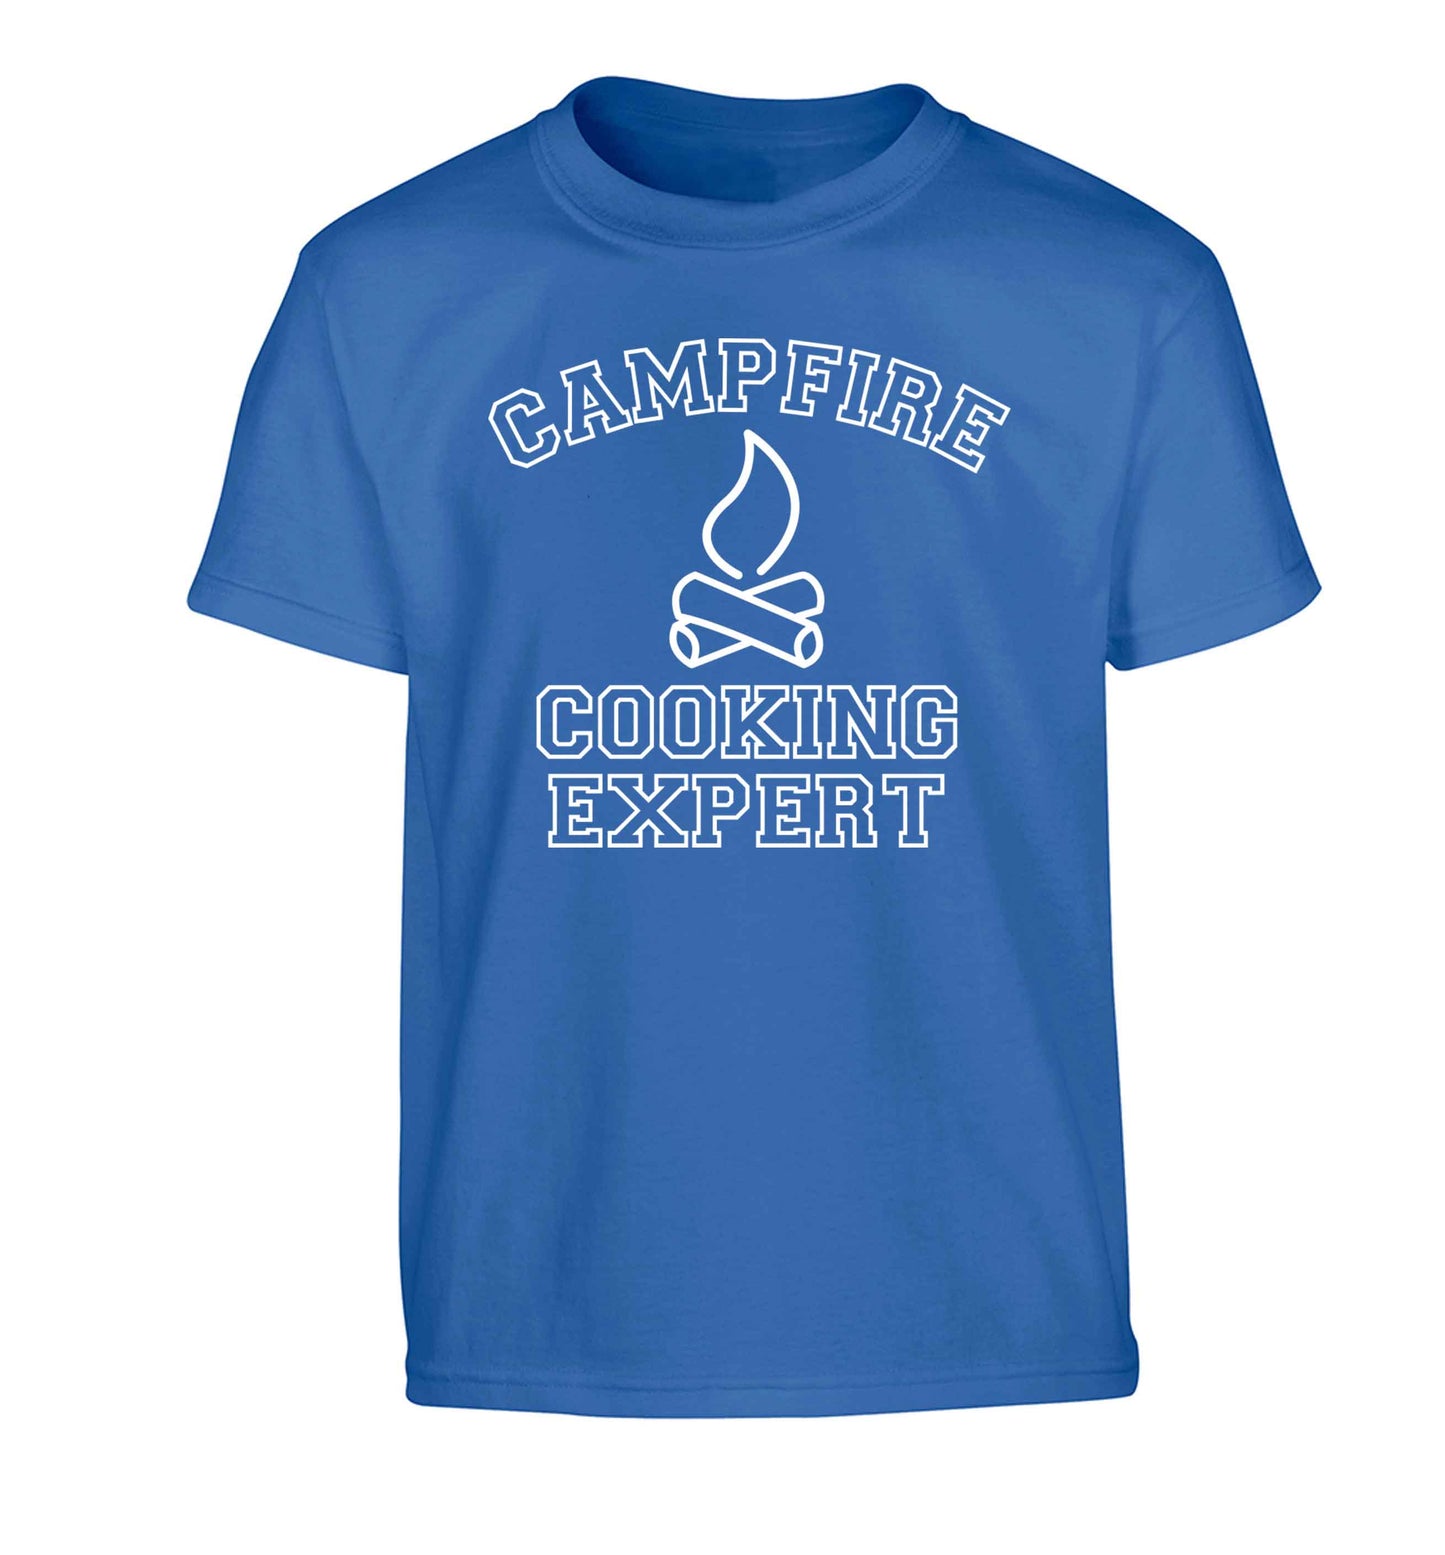 Campfire cooking expert Children's blue Tshirt 12-13 Years